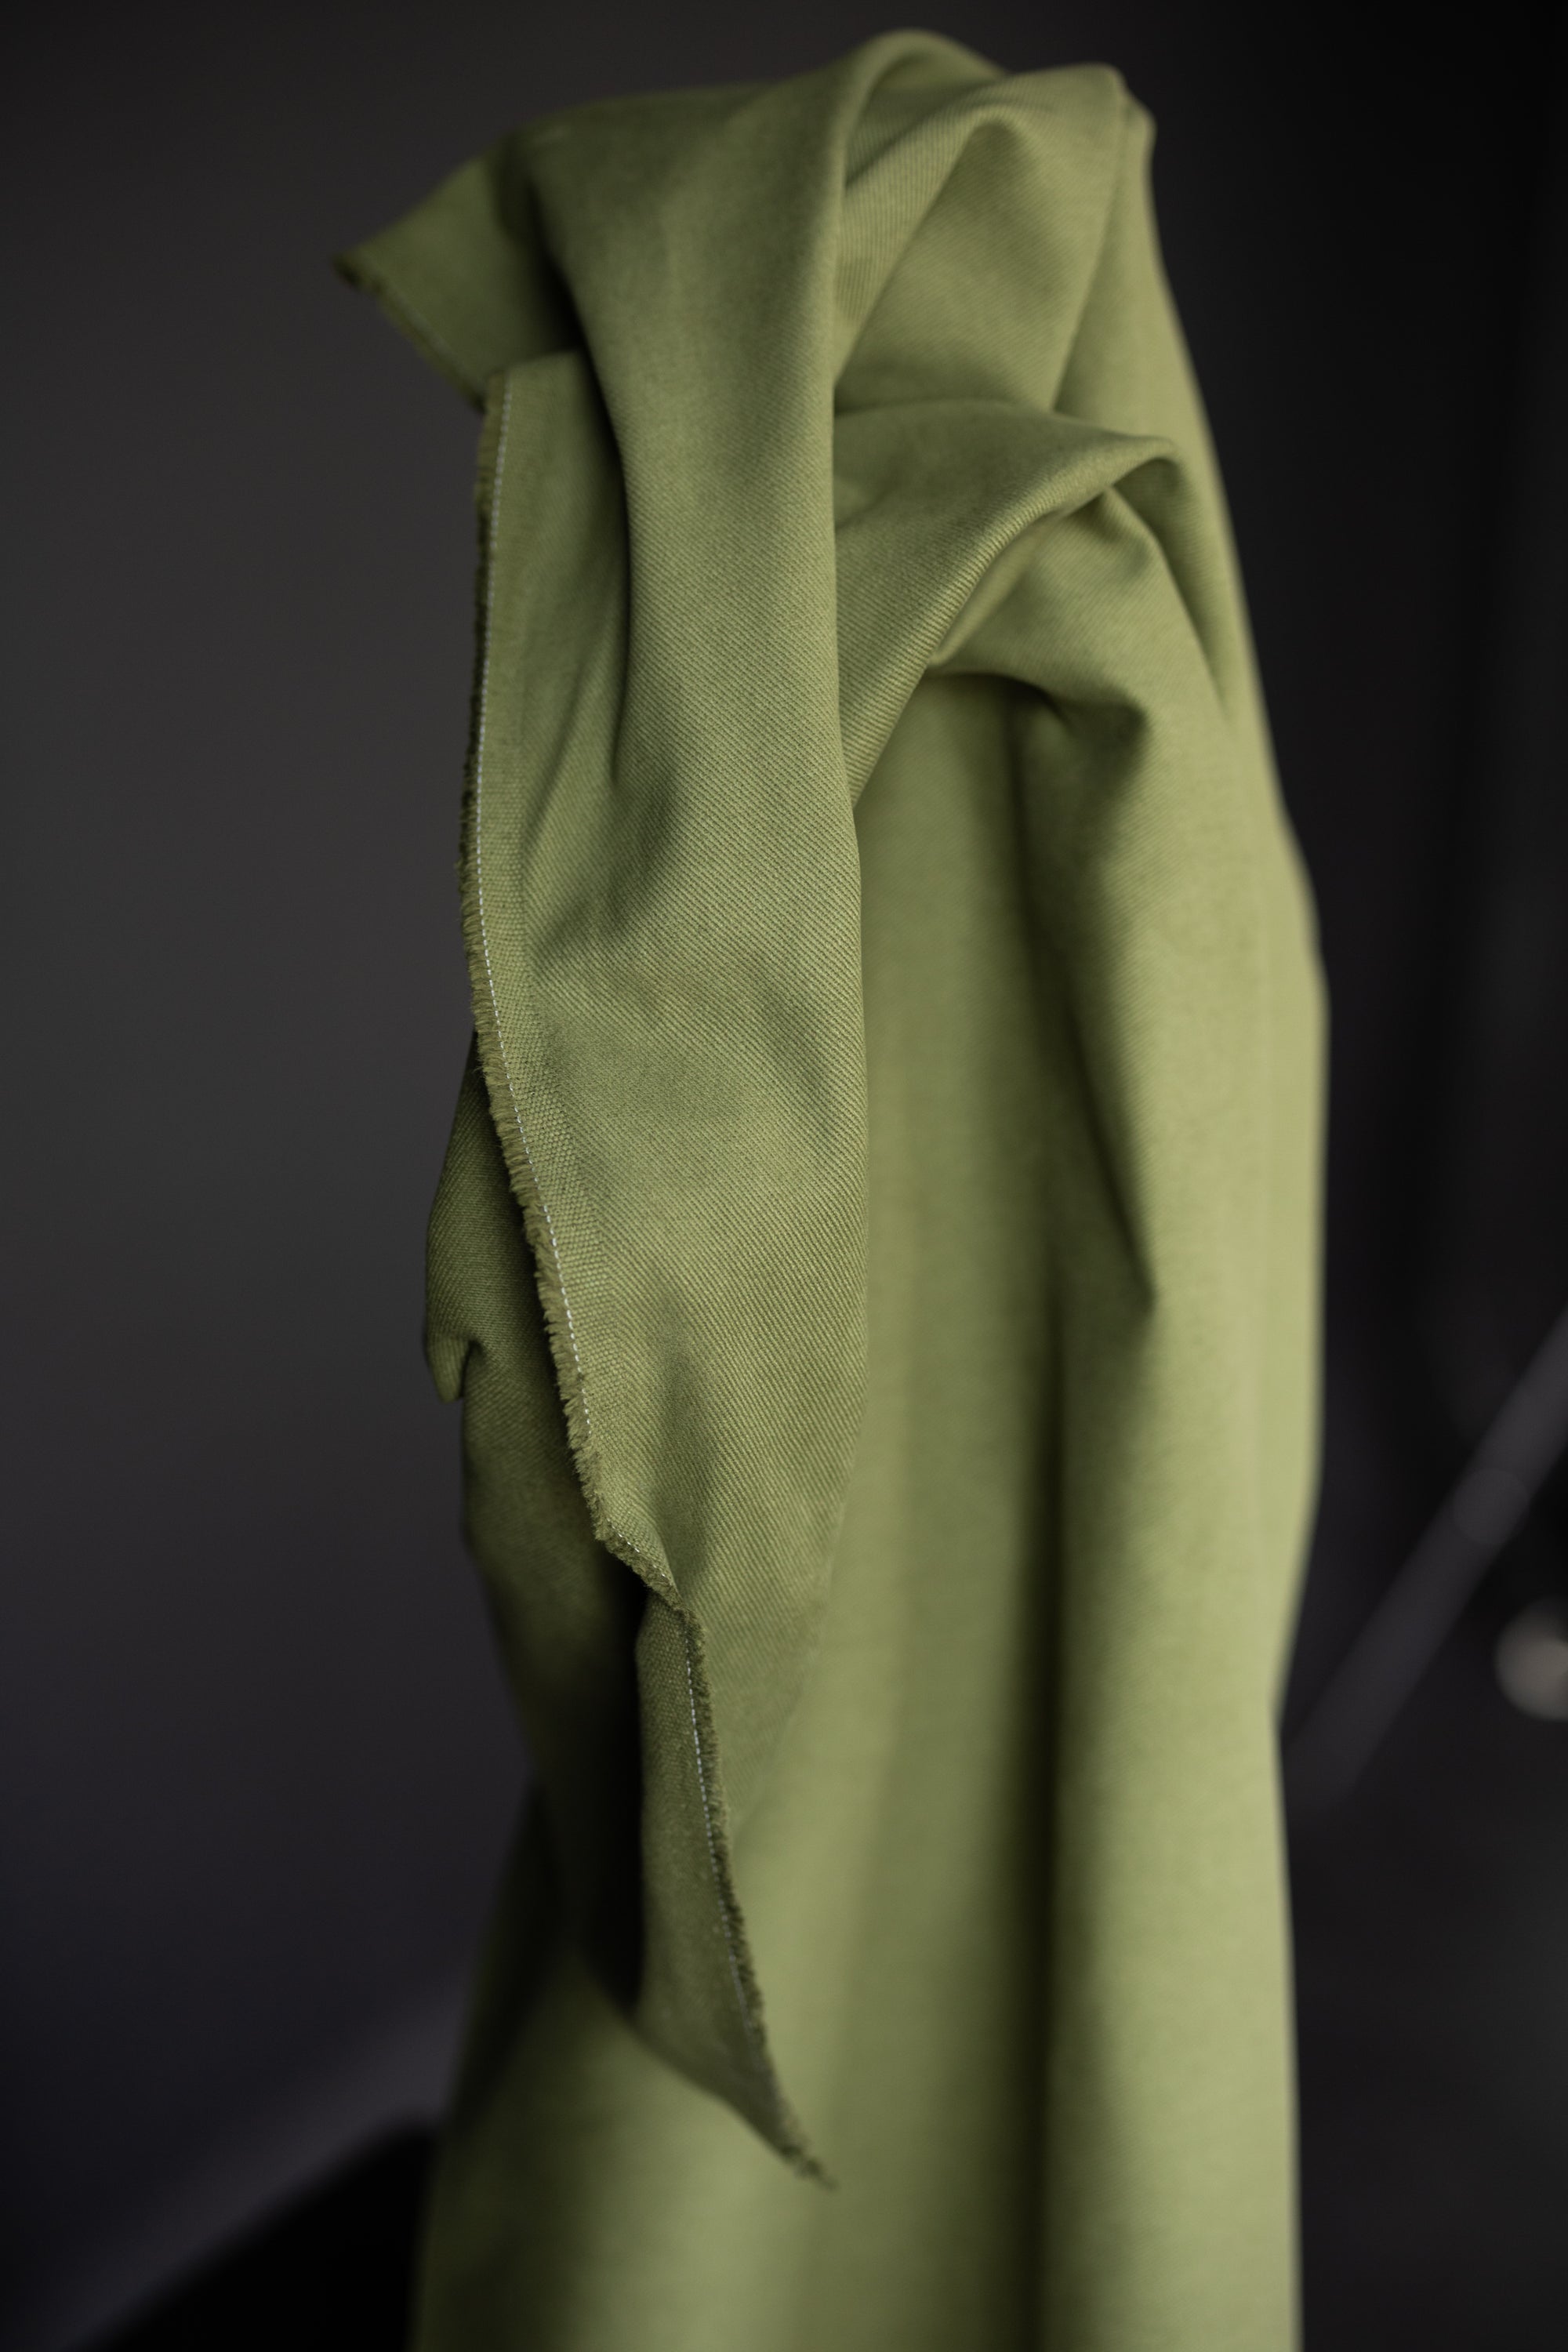 12 oz sanded twill fabric in a spring green on a dark grey background.